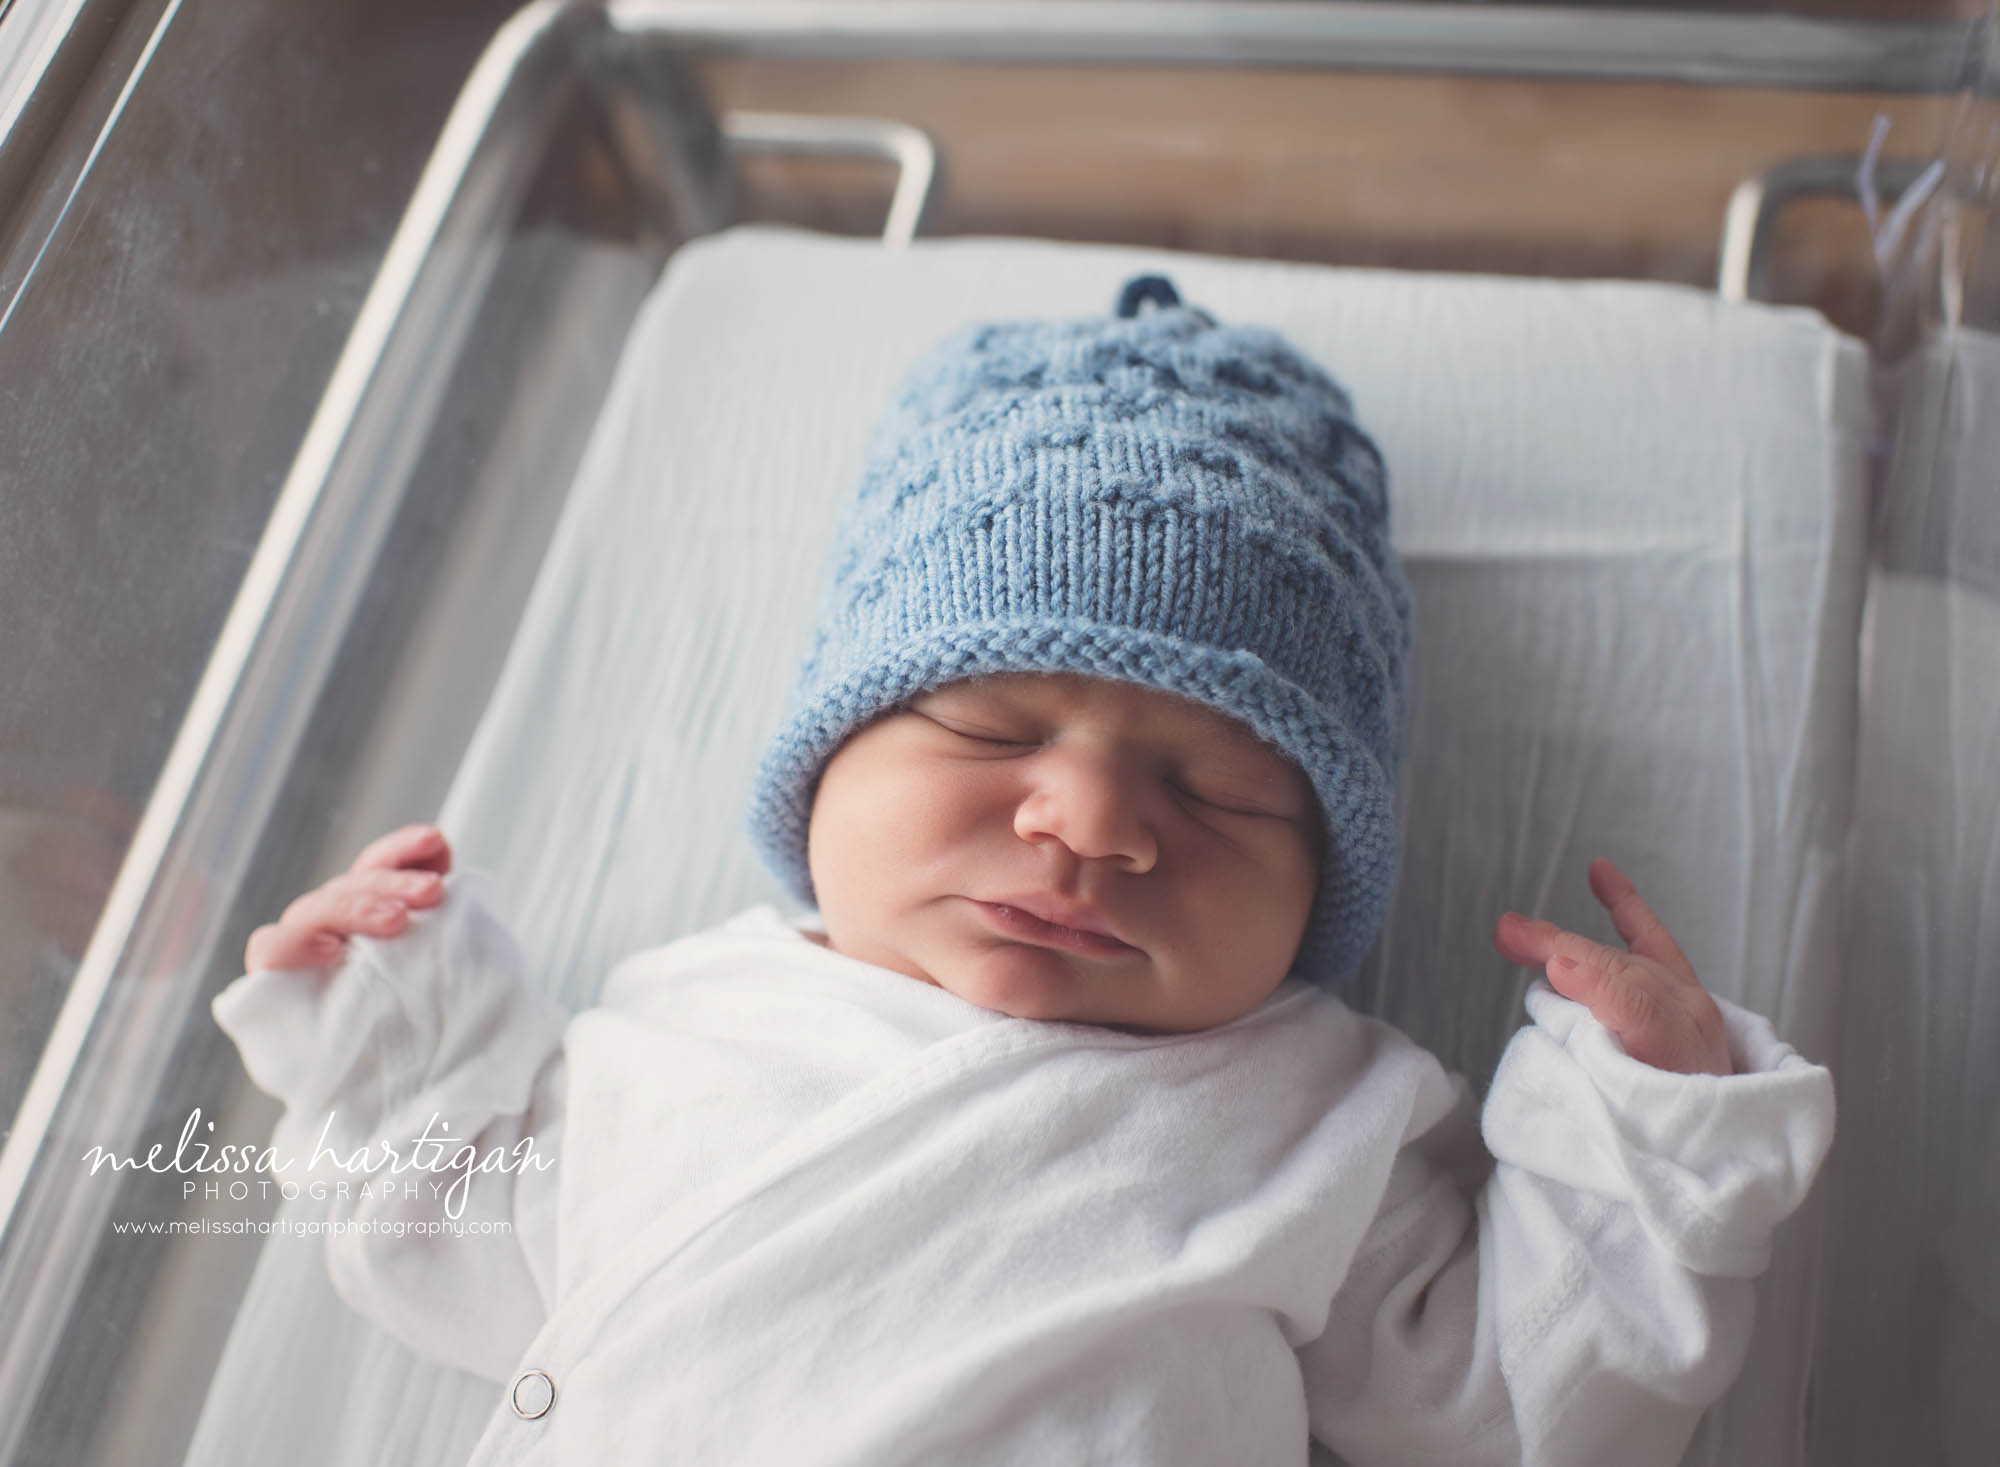 newborn baby in hospital basinet